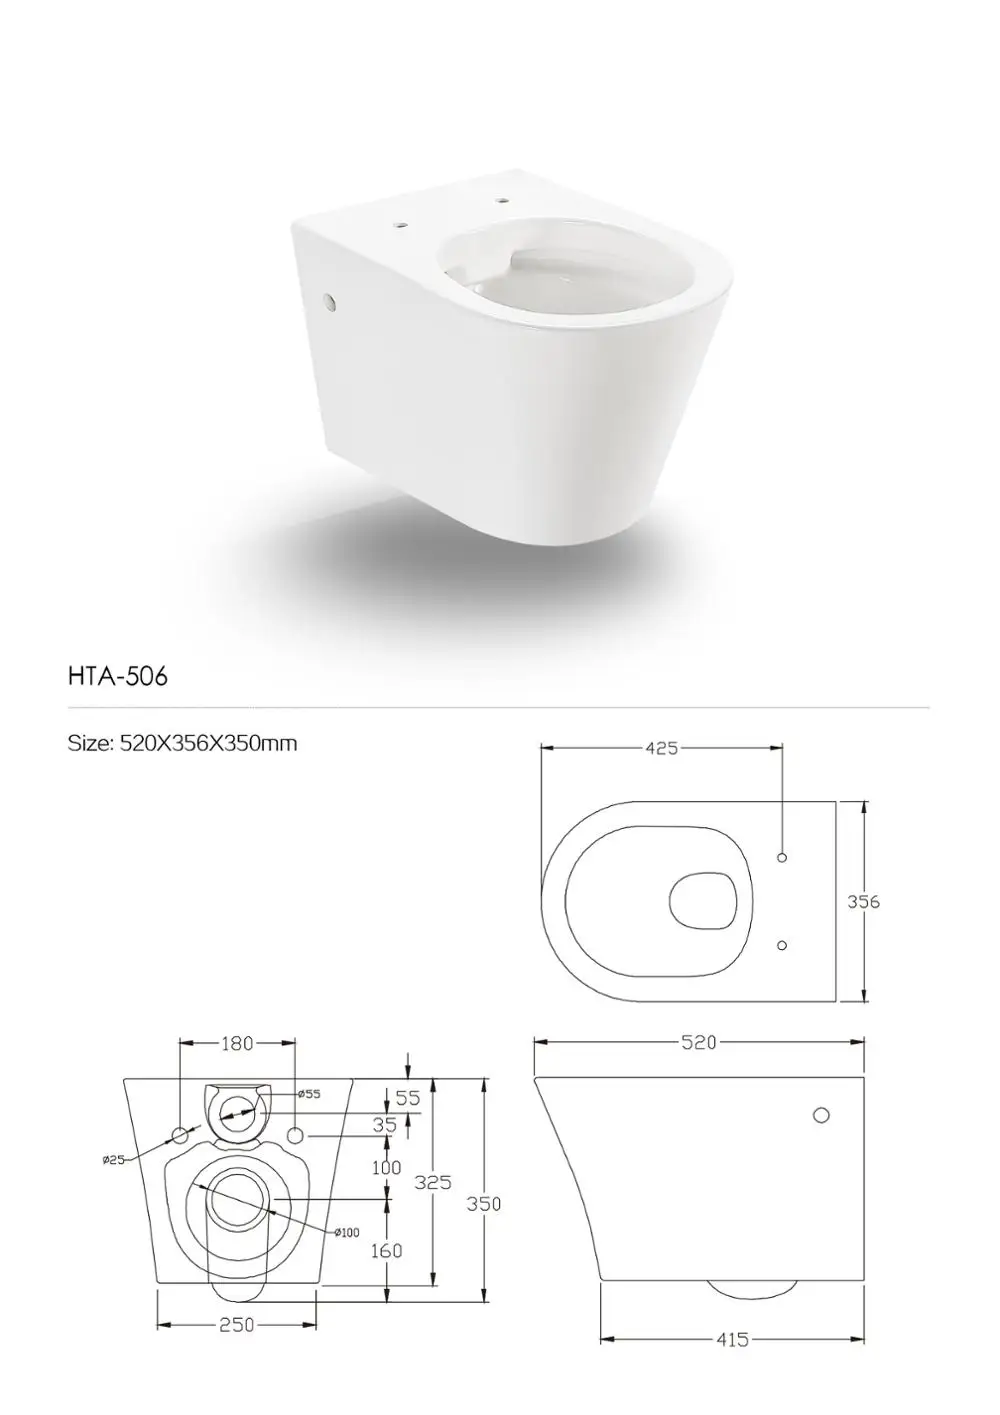 Ali baba china manufacturer Modern design portable bathroom toilet 520*356*360